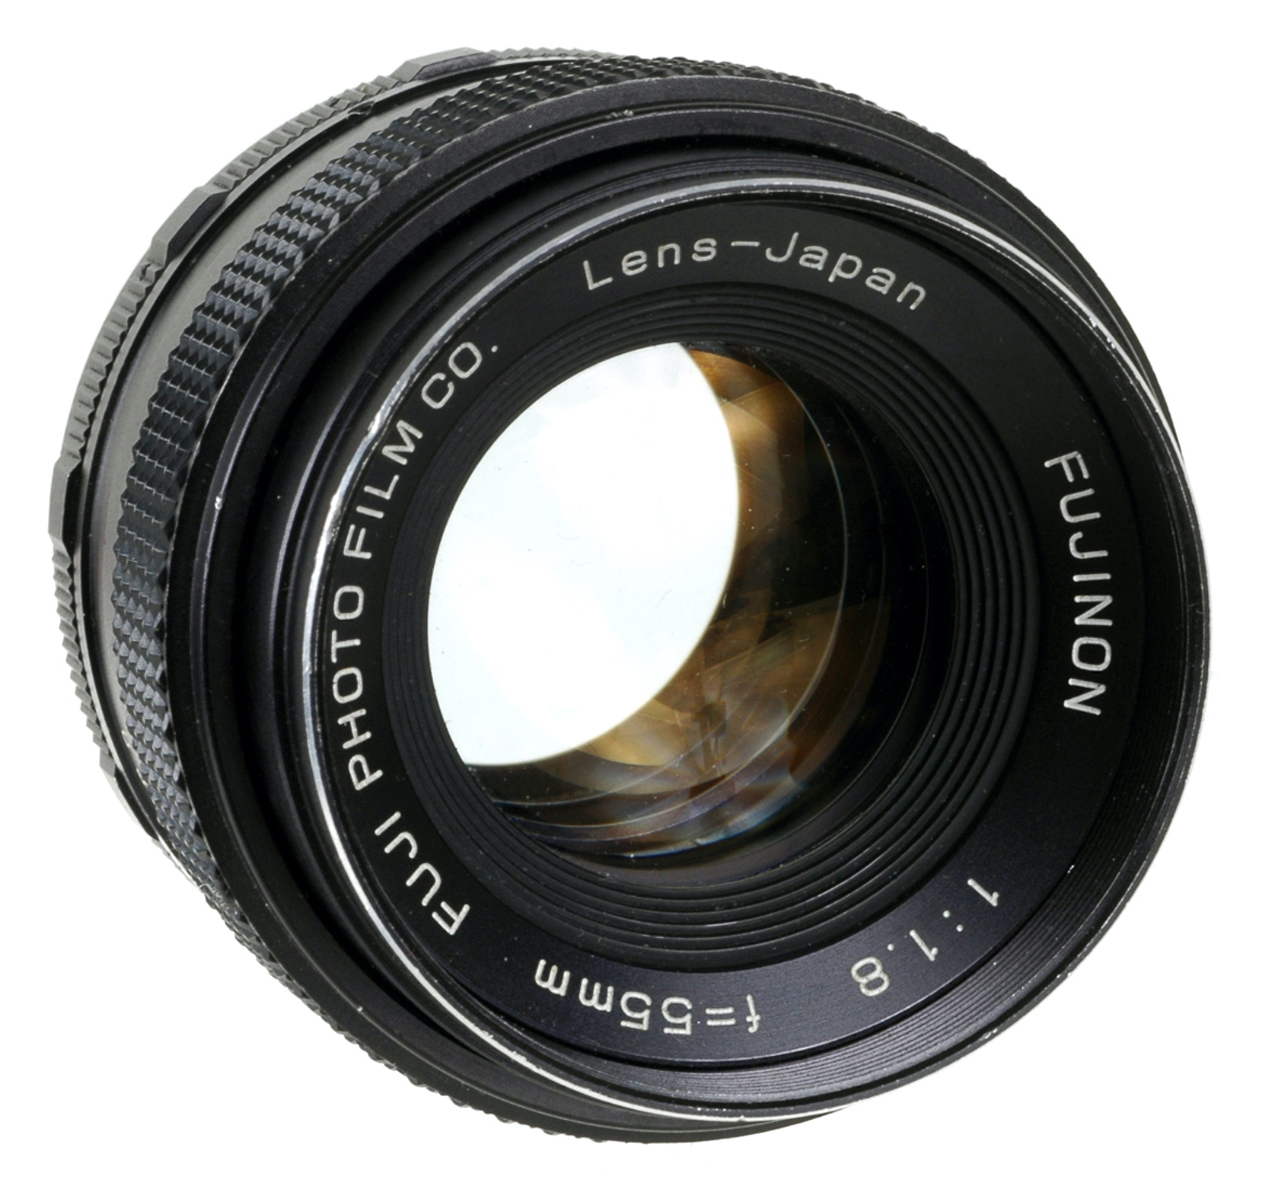 Fuji Photo Film [EBC] Fujinon 55mm F/1.8 | LENS-DB.COM